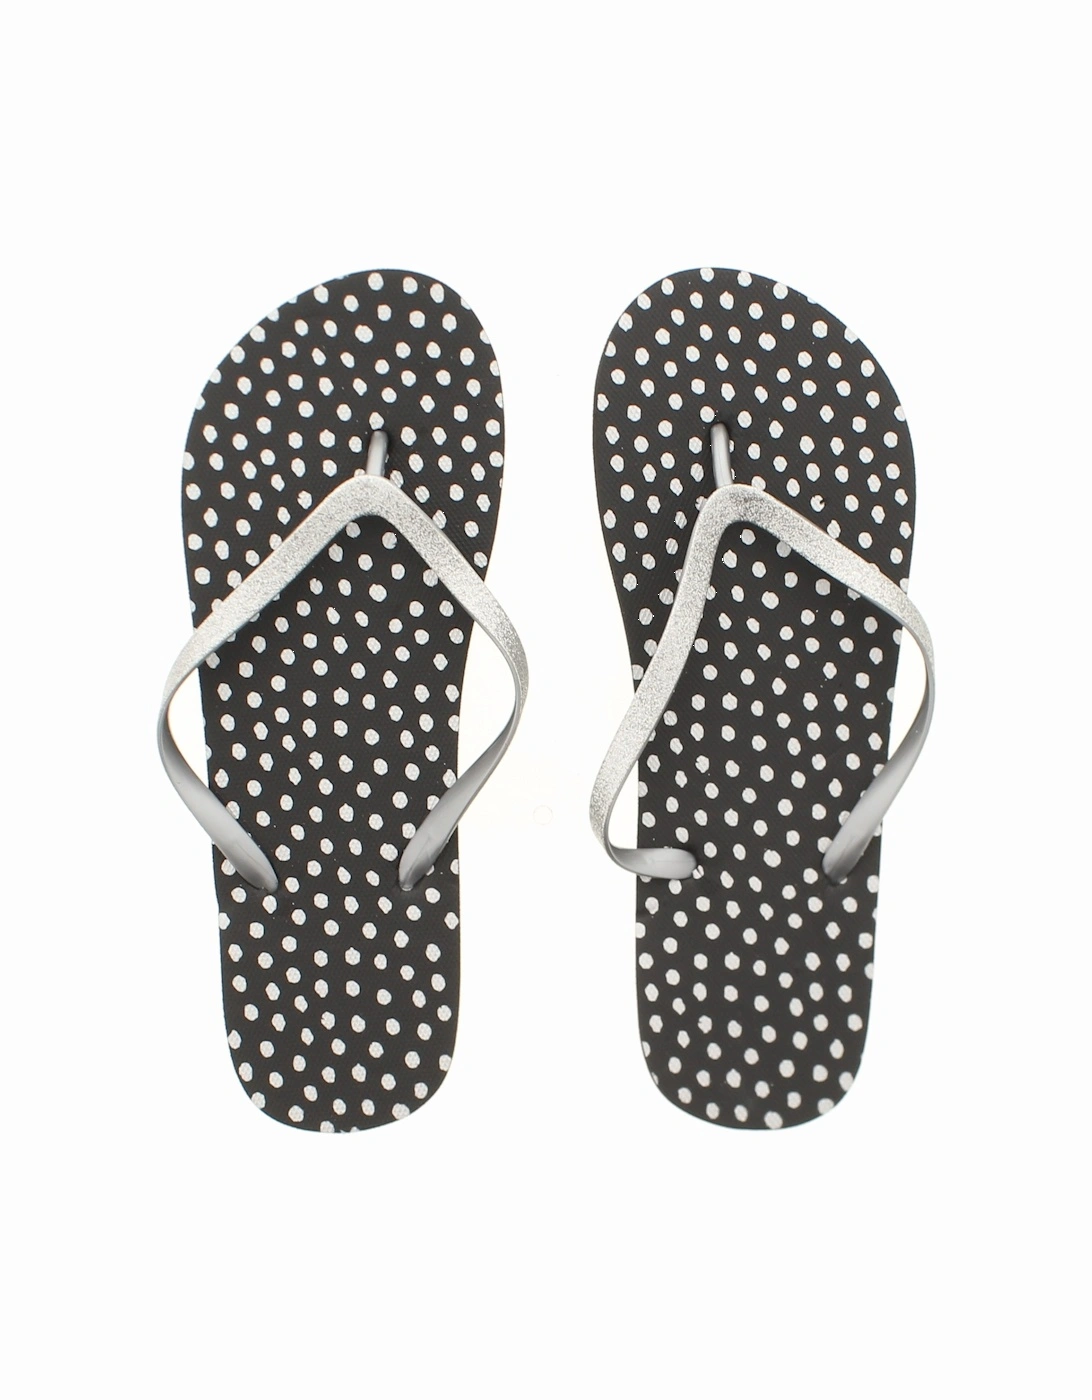 Womens Sandals Spot Gliiter Flip Fl Flip Flops Toe Thong Pool Black UK S, 2 of 1